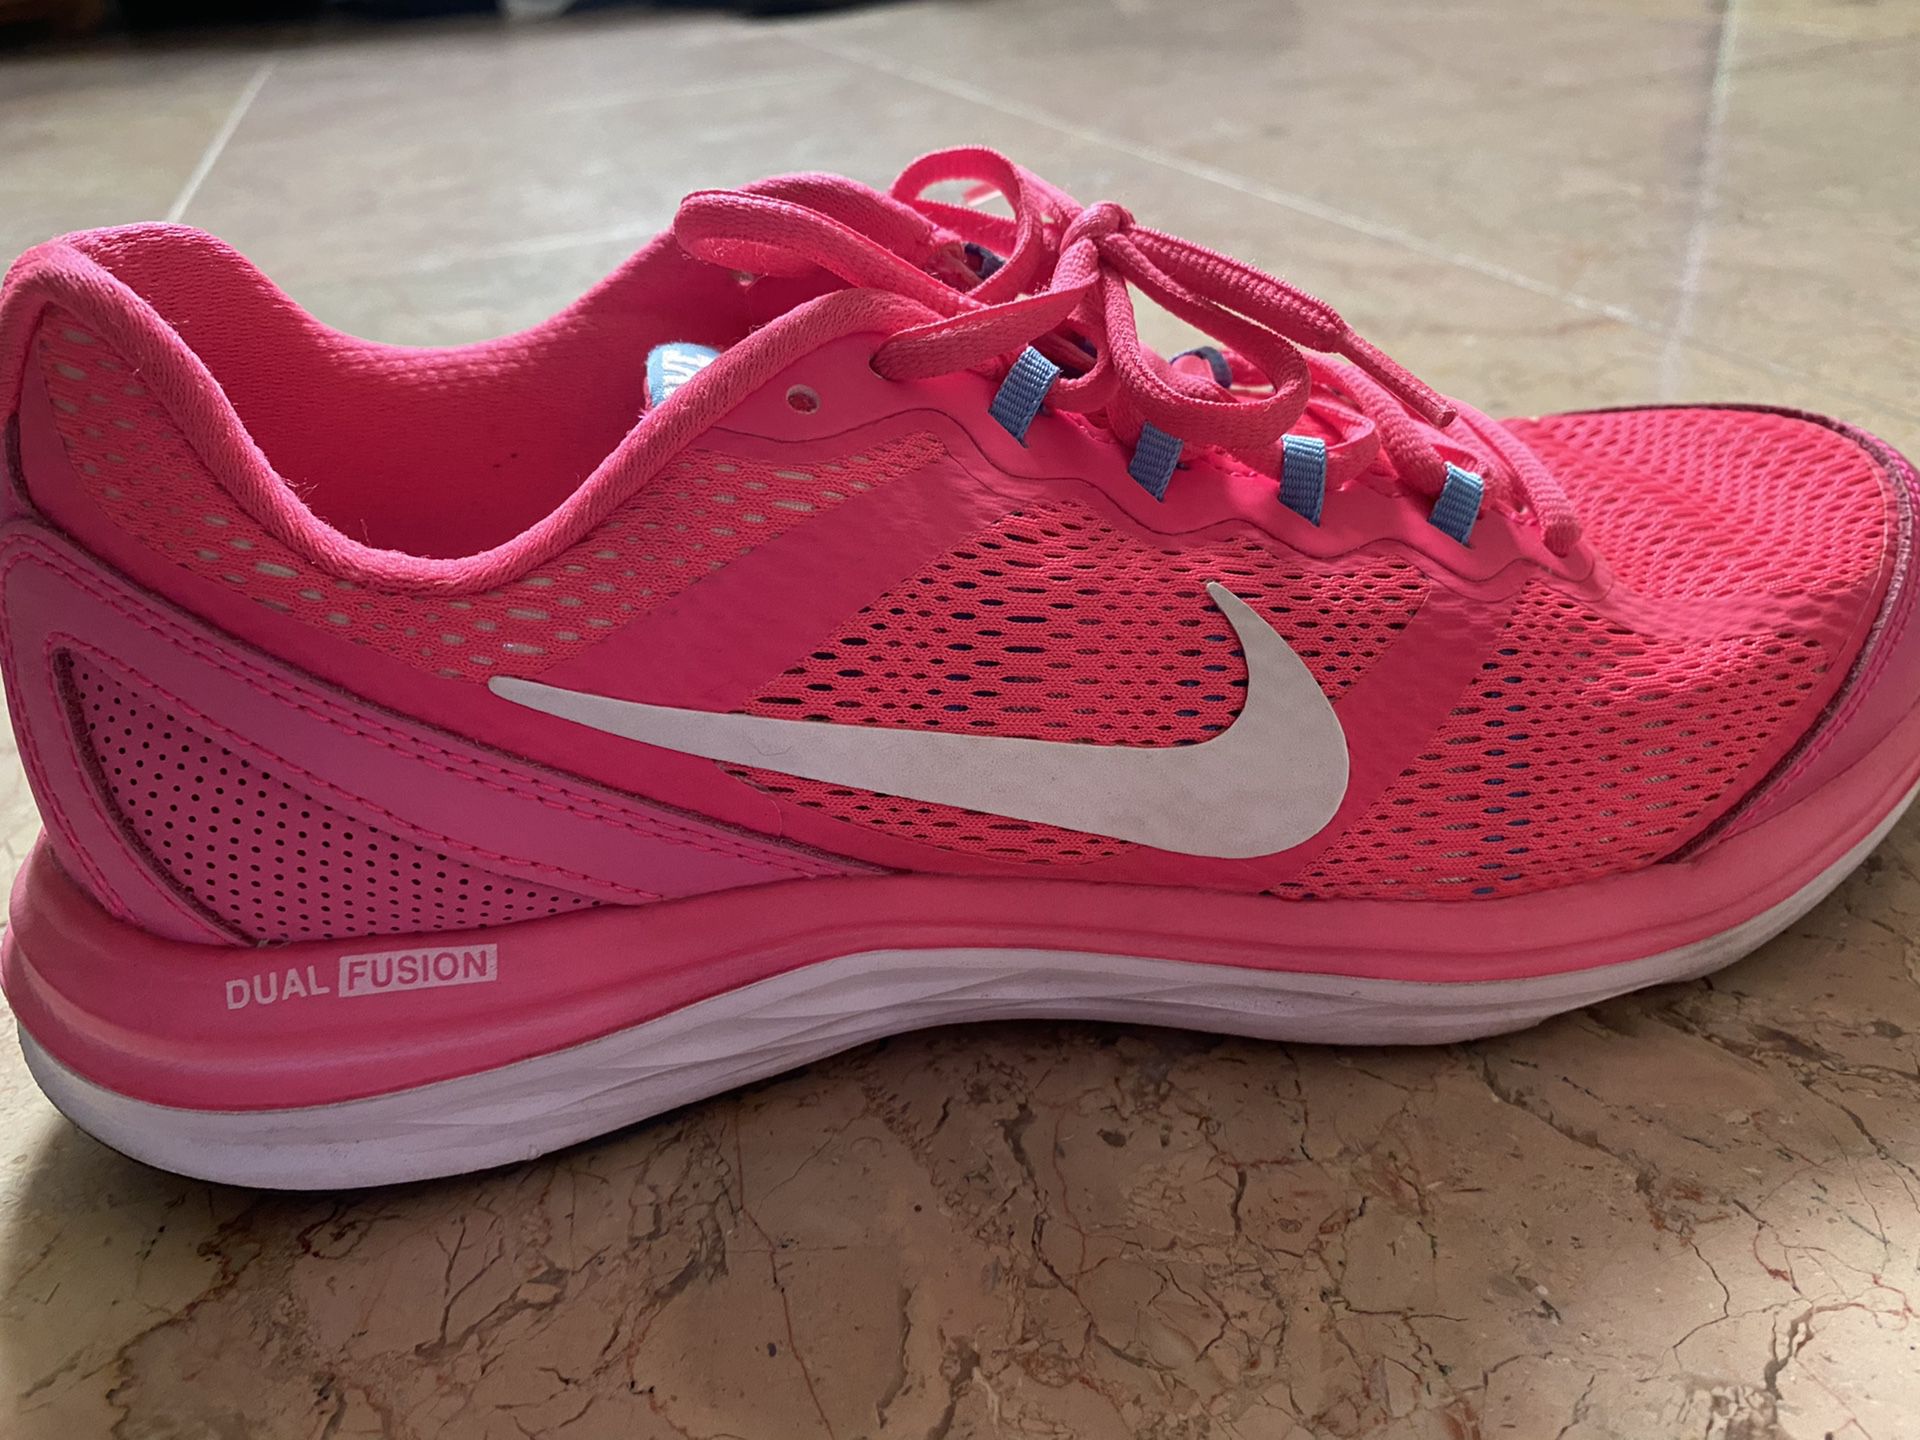 Nike shoes-hot pink women’s size 9